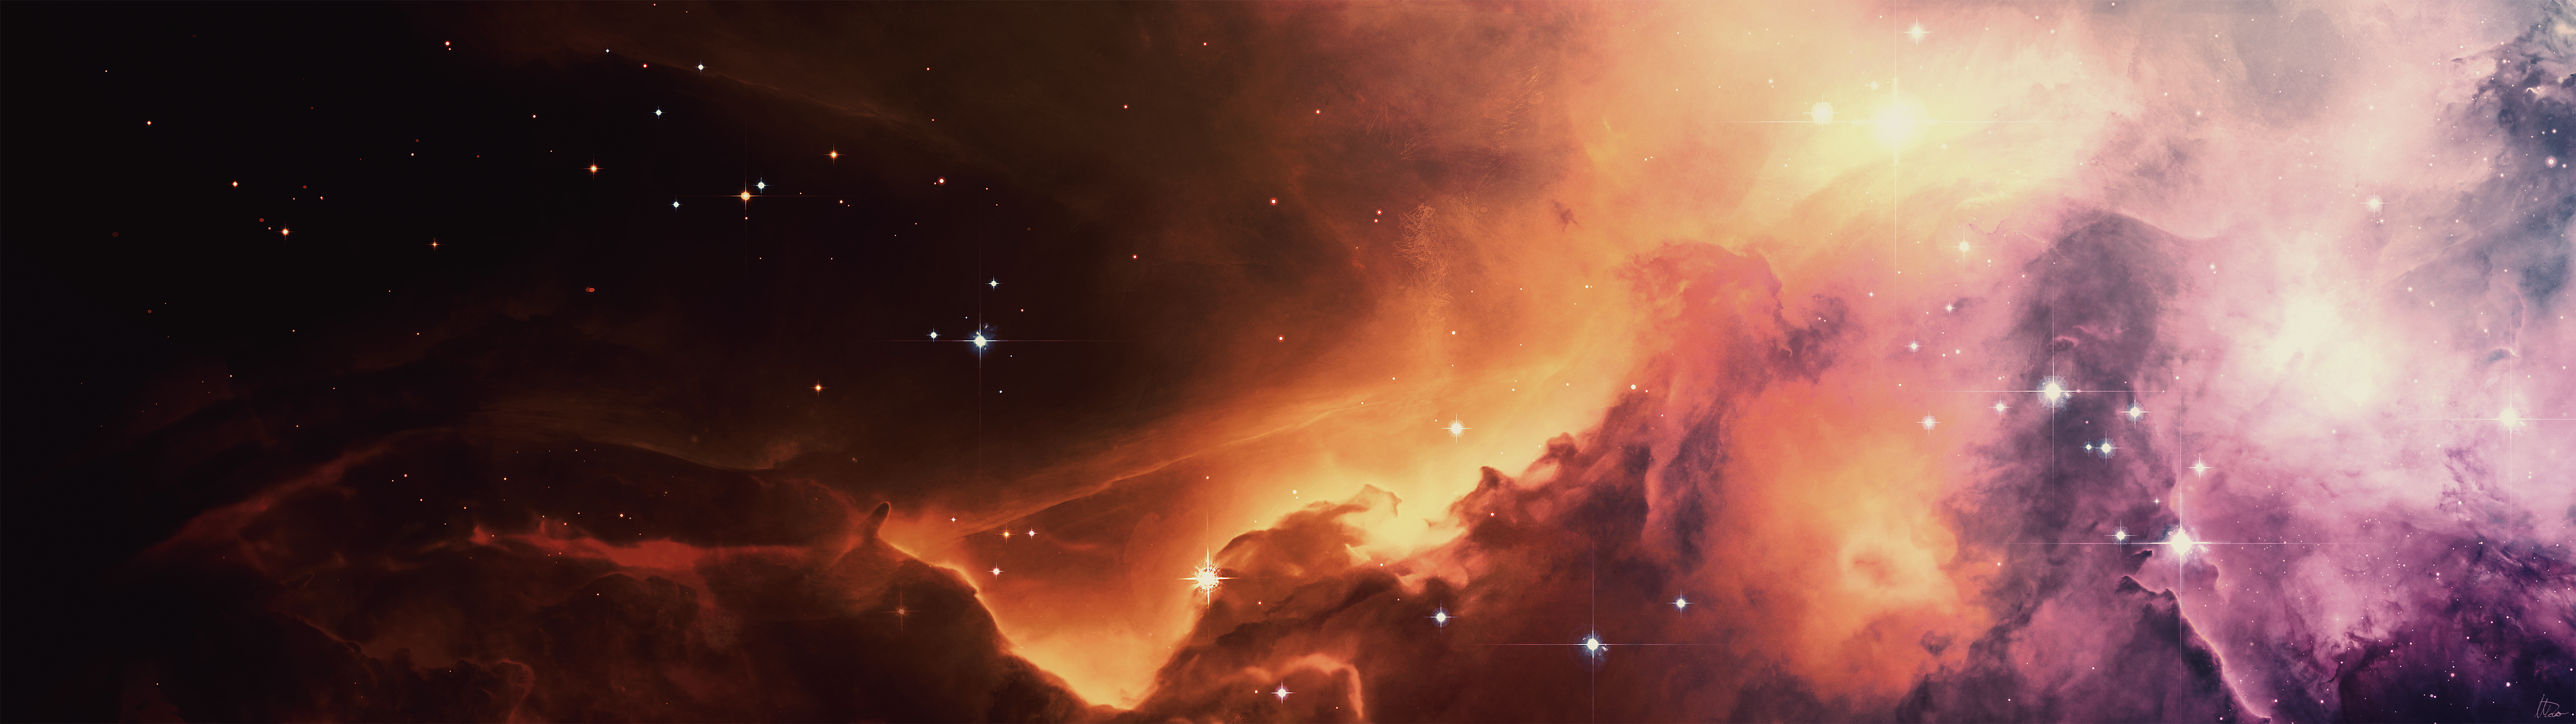 Stellar Symphony (Dual Monitor Wallpaper) by MaxDocker on DeviantArt